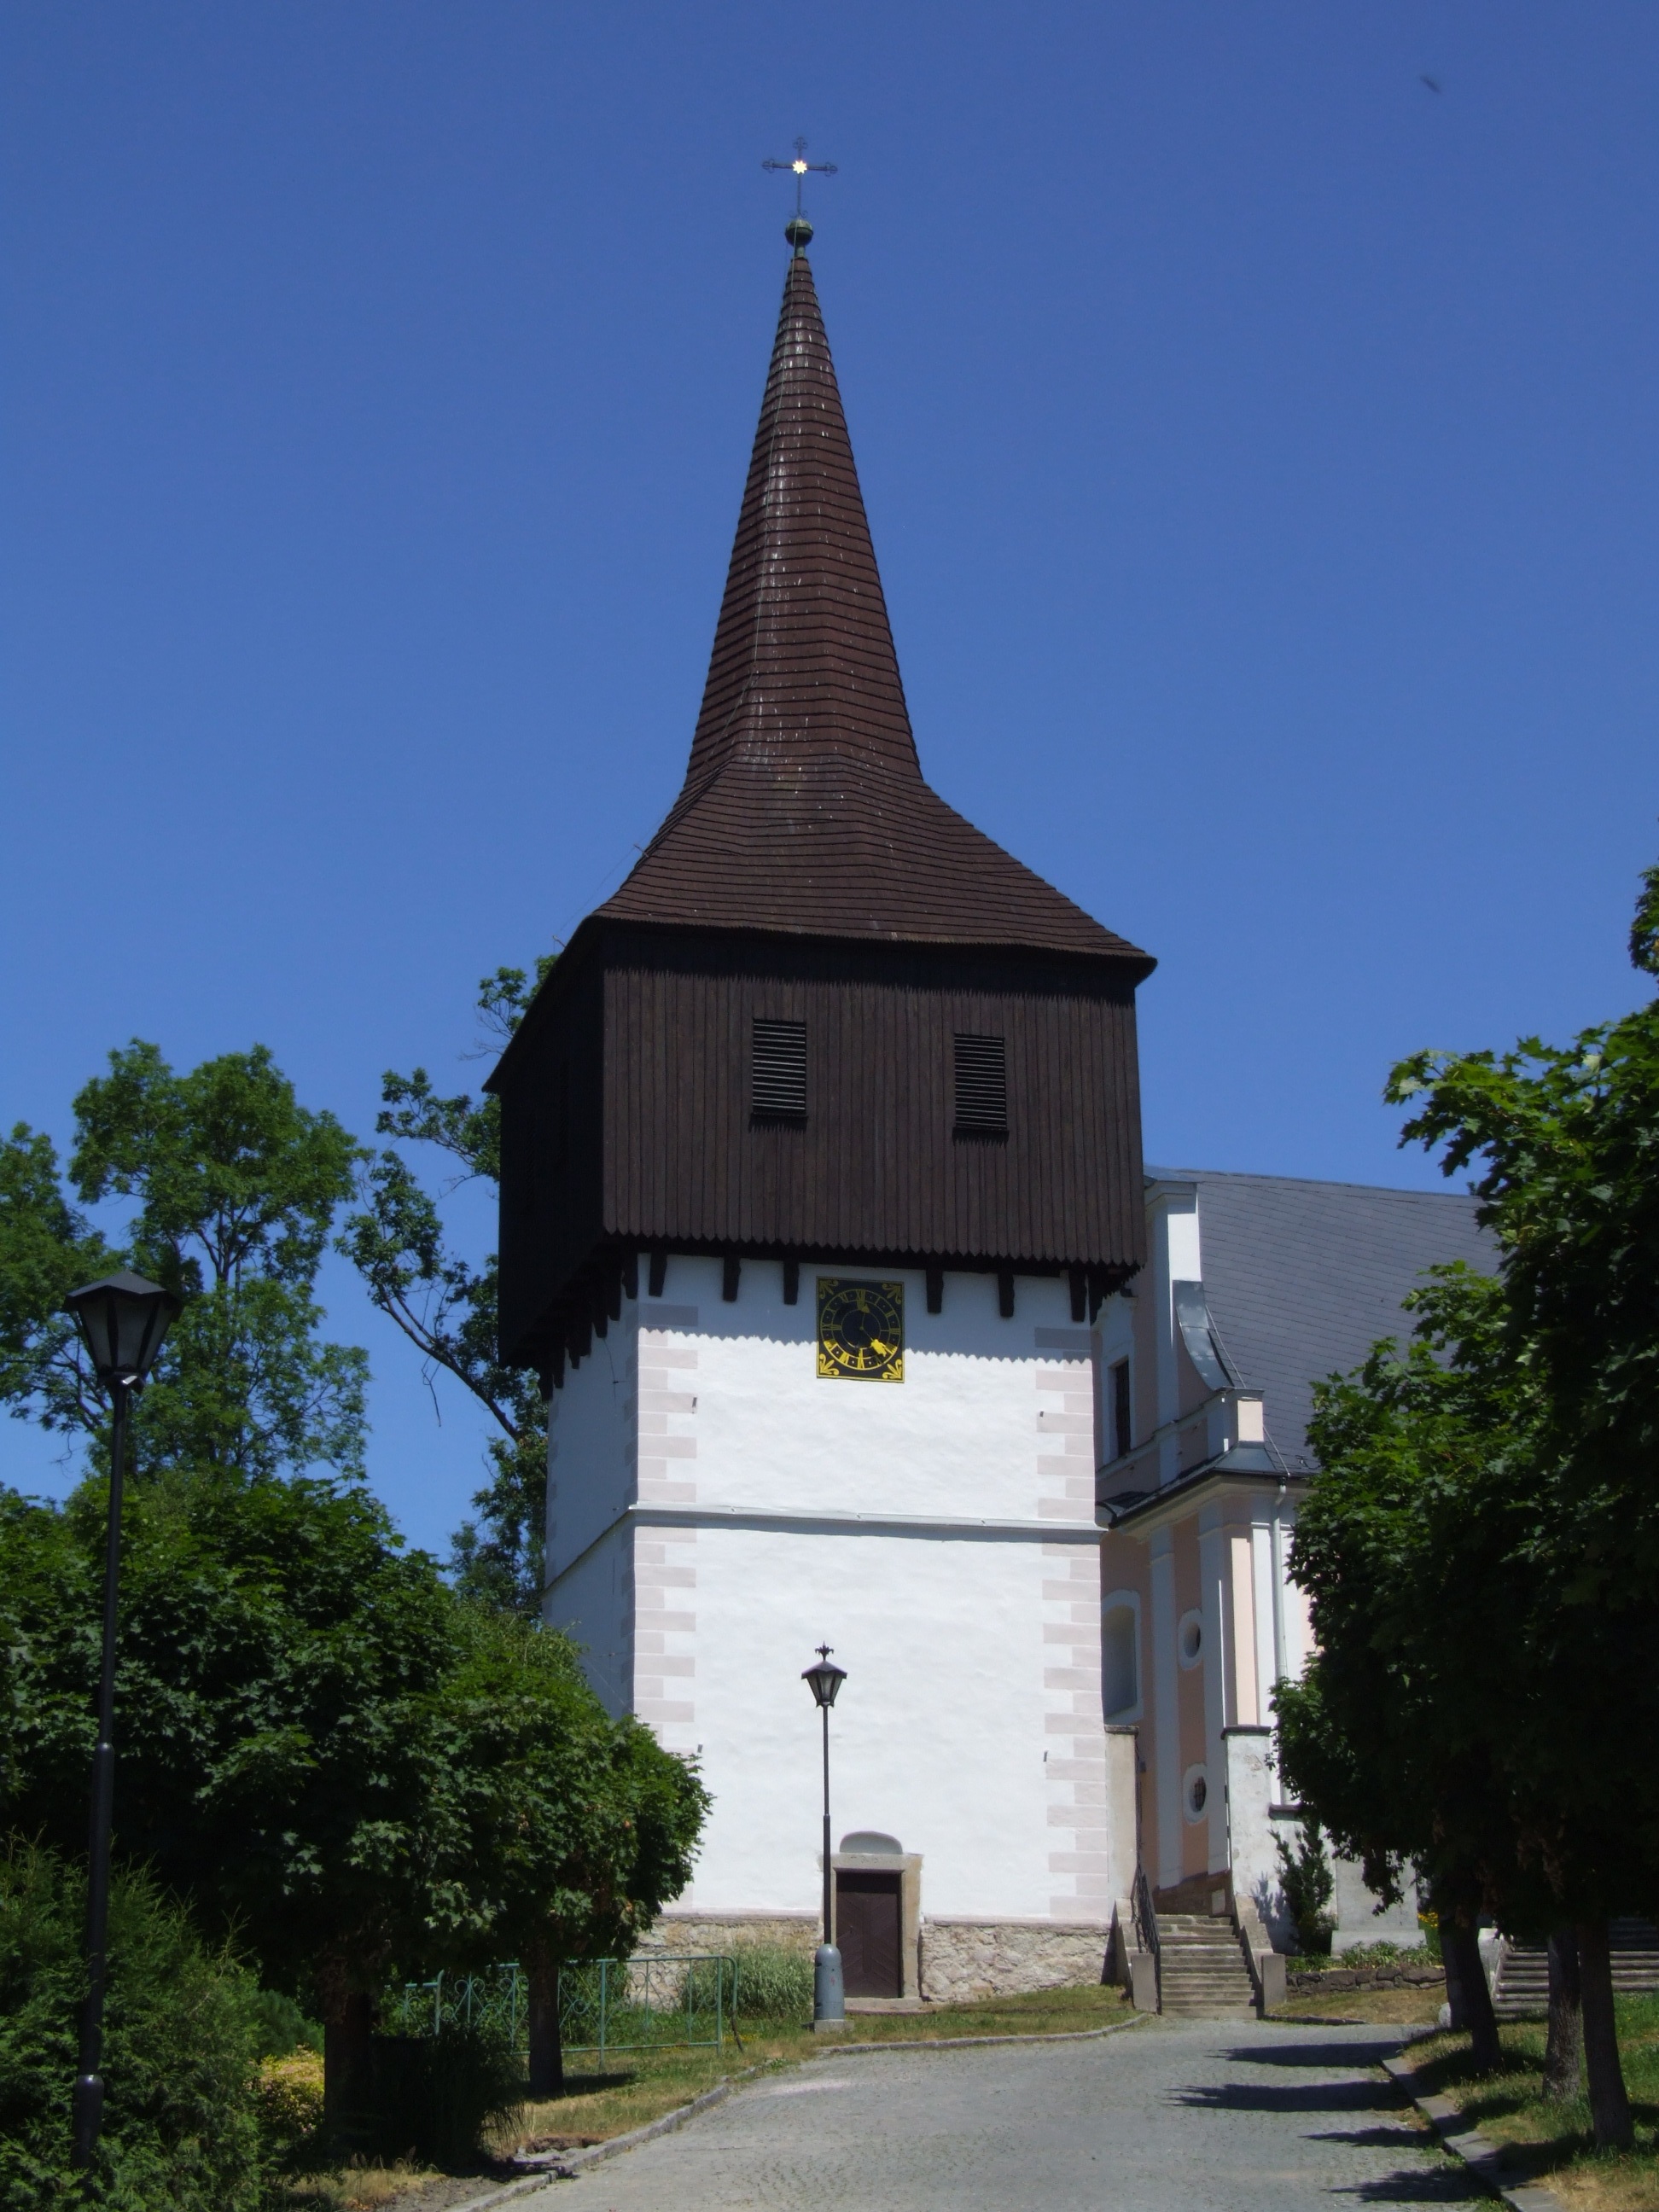 Hronov - the Bell Tower